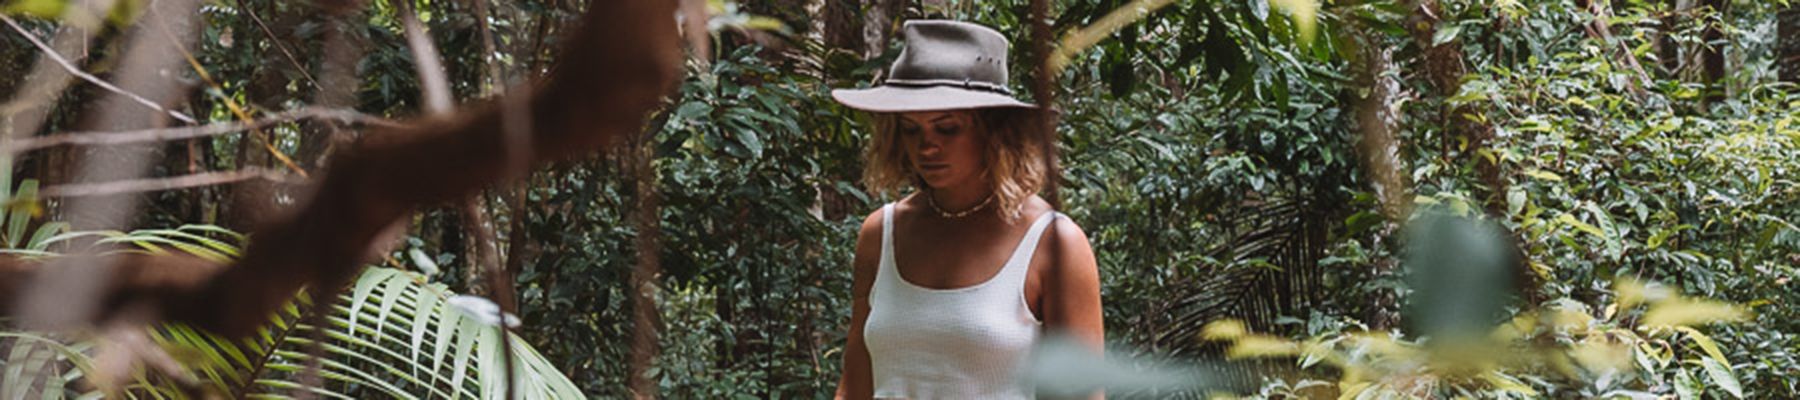 Woman walking through rainforest with white hat